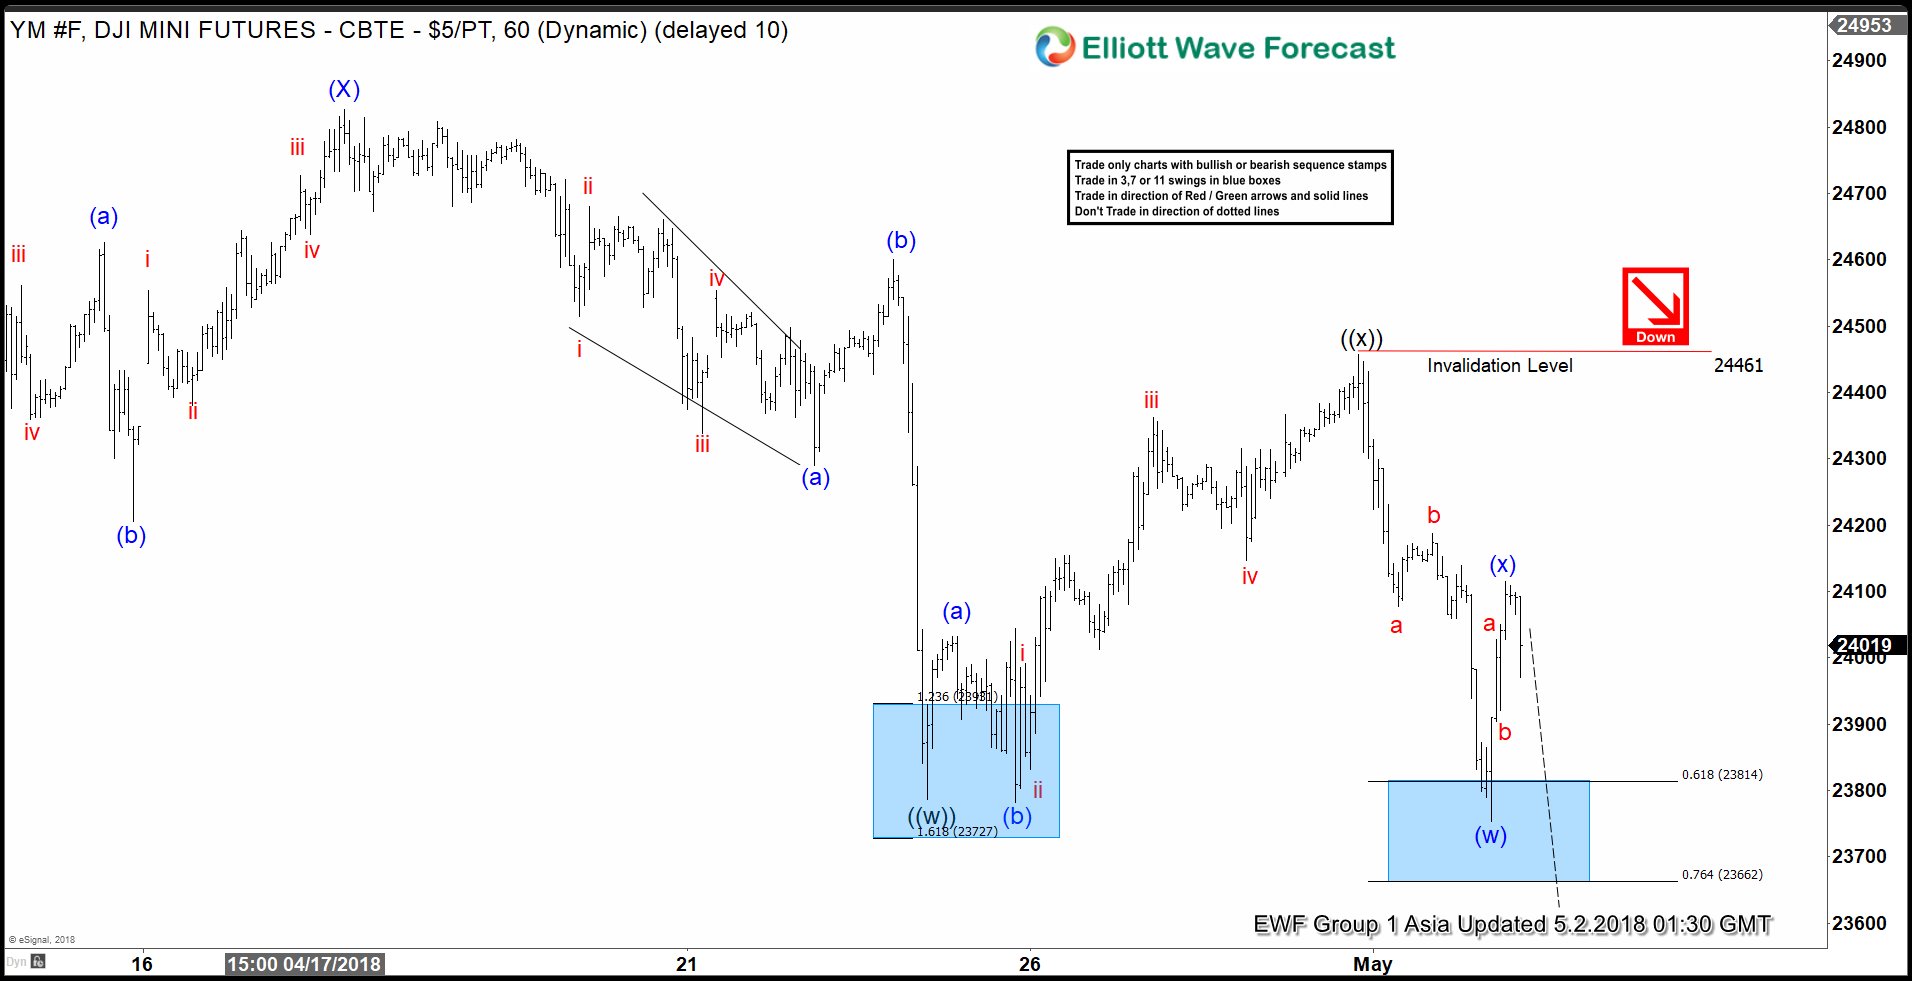 Dow Jones Elliott Wave View: Calling Lower